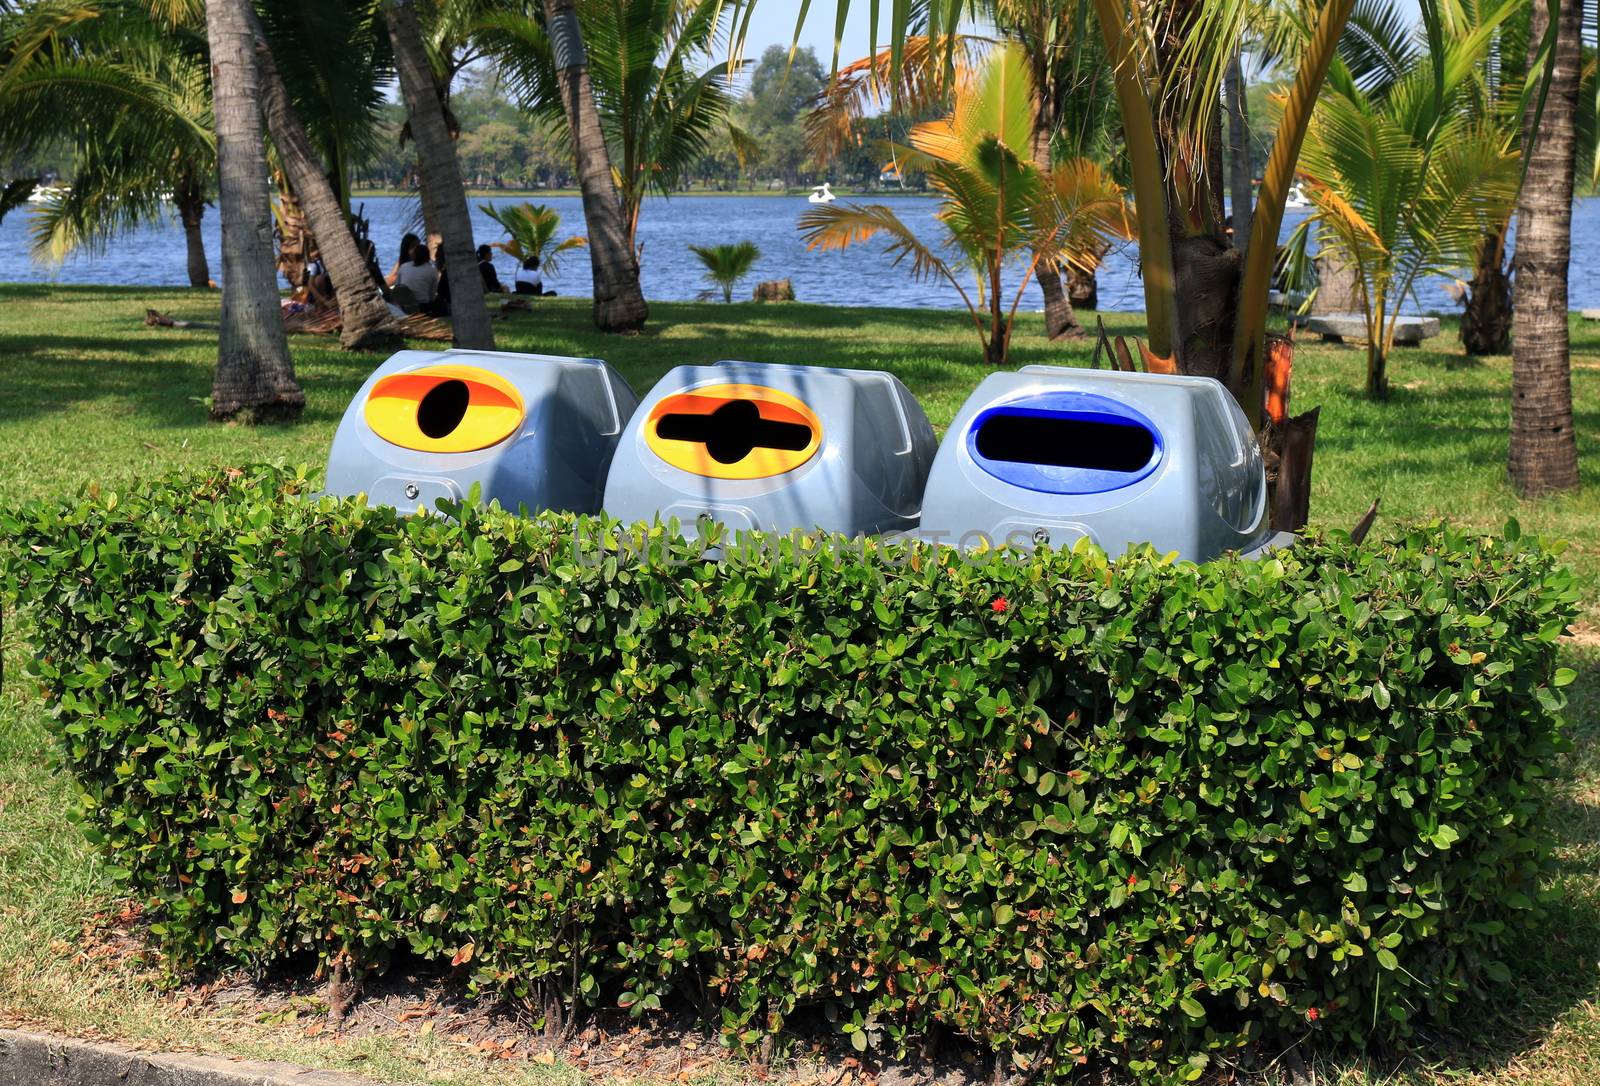 Bin, garbage bin plastic, Plastic waste bin 3 types of waste for recycle in tree wall at garden public by cgdeaw